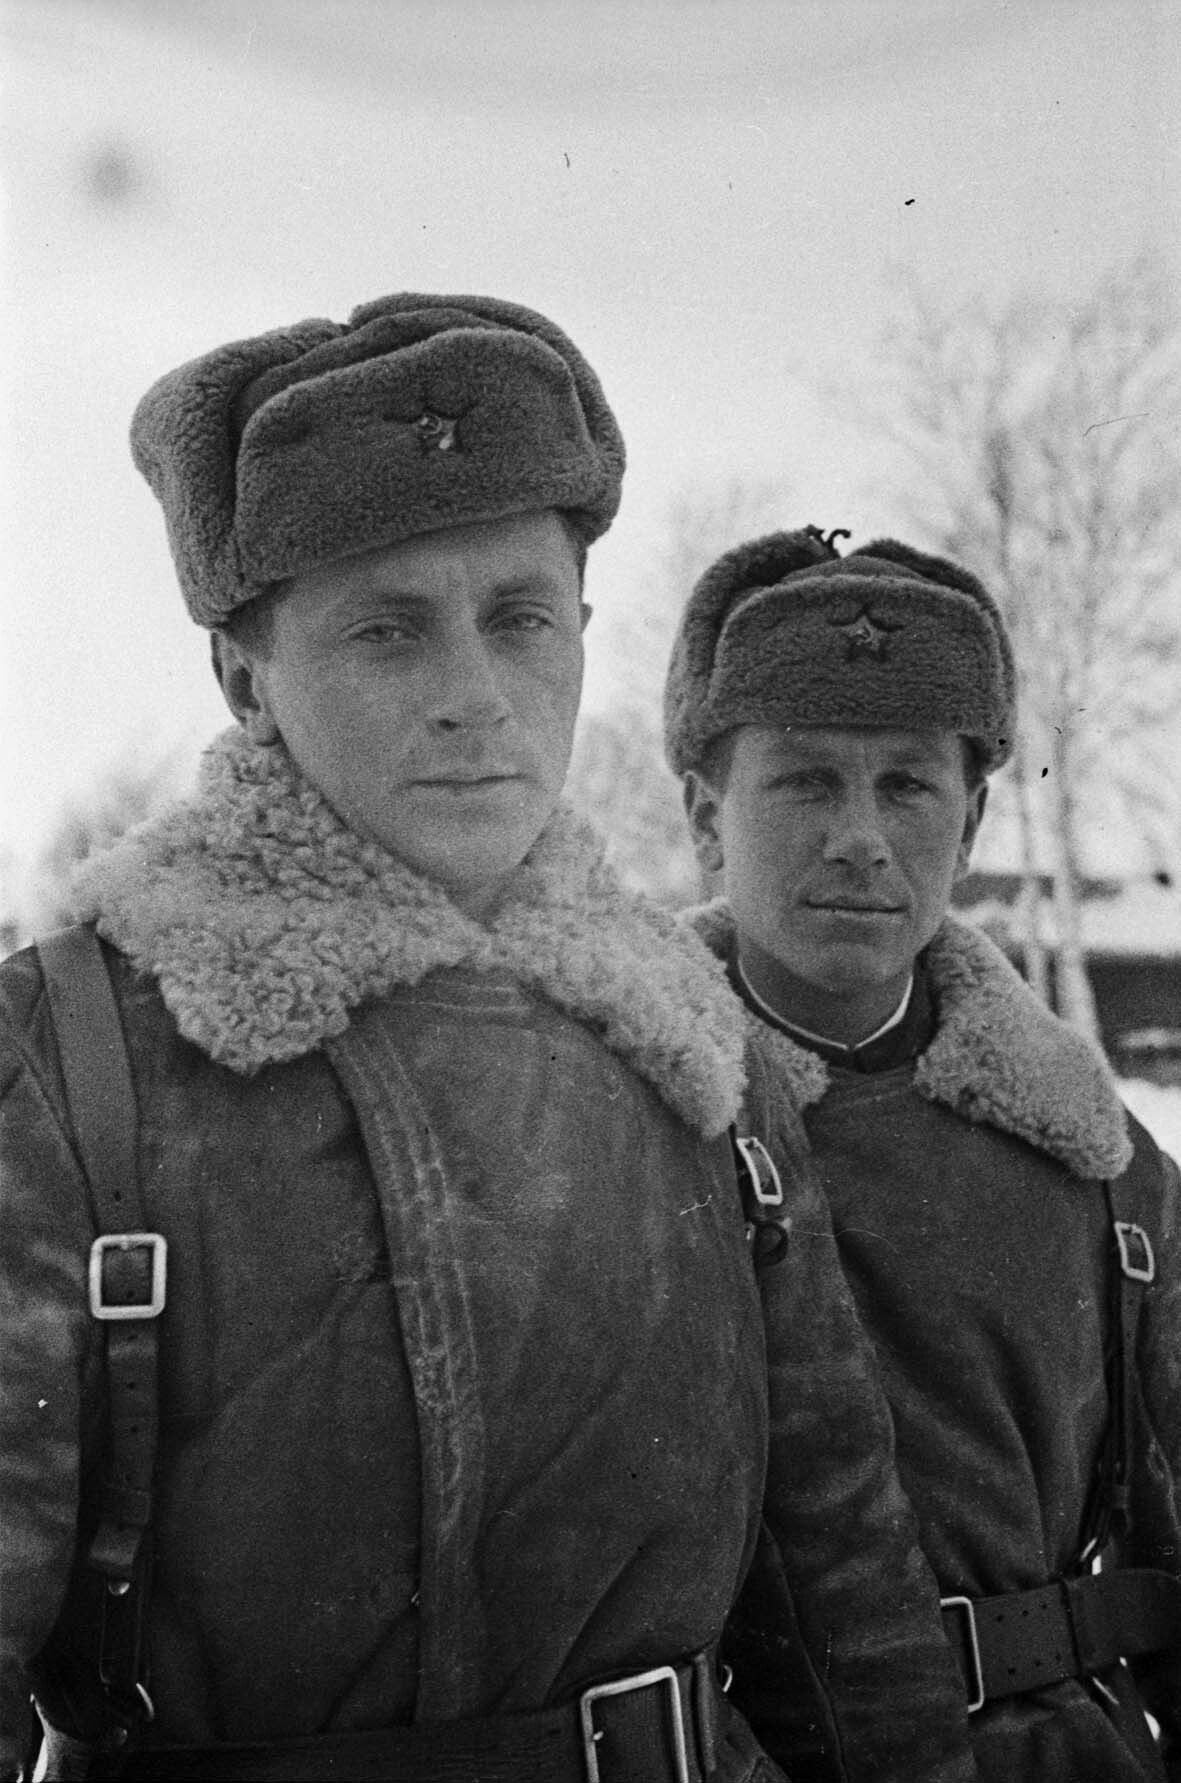 Fotografie: Kommandeure von Flakbatterien, Kalininer Front, 11. März 1942 (Museum Berlin-Karlshorst RR-P)